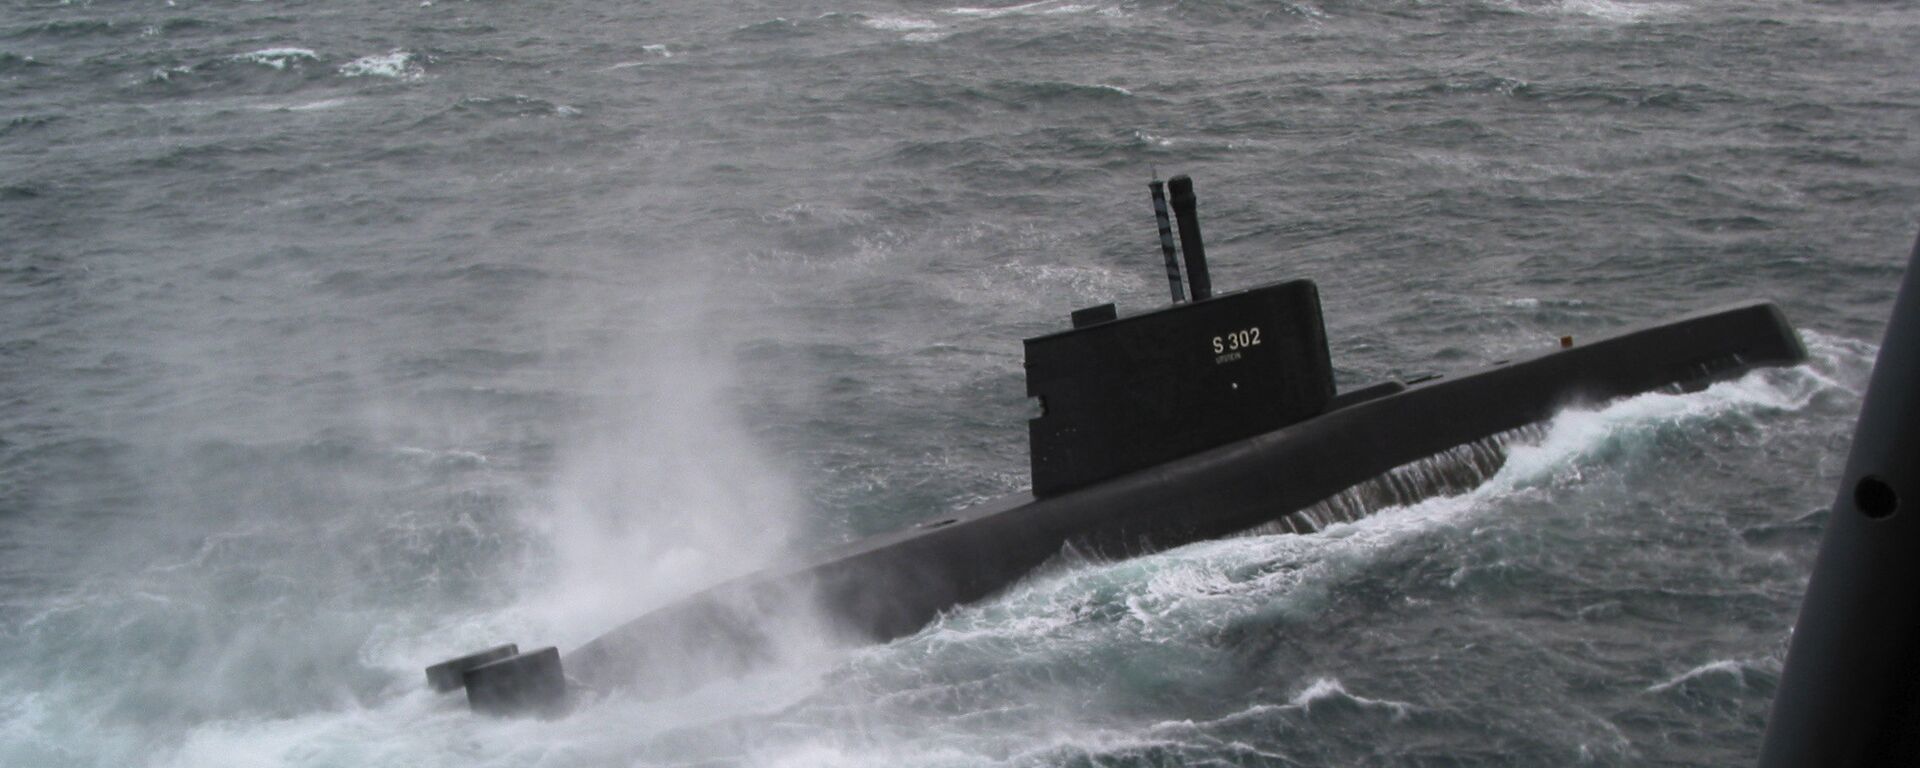 The Norwegian ULA class submarine Utstein (KNM 302) participates in NATO exercise Odin-One - Sputnik International, 1920, 11.11.2021